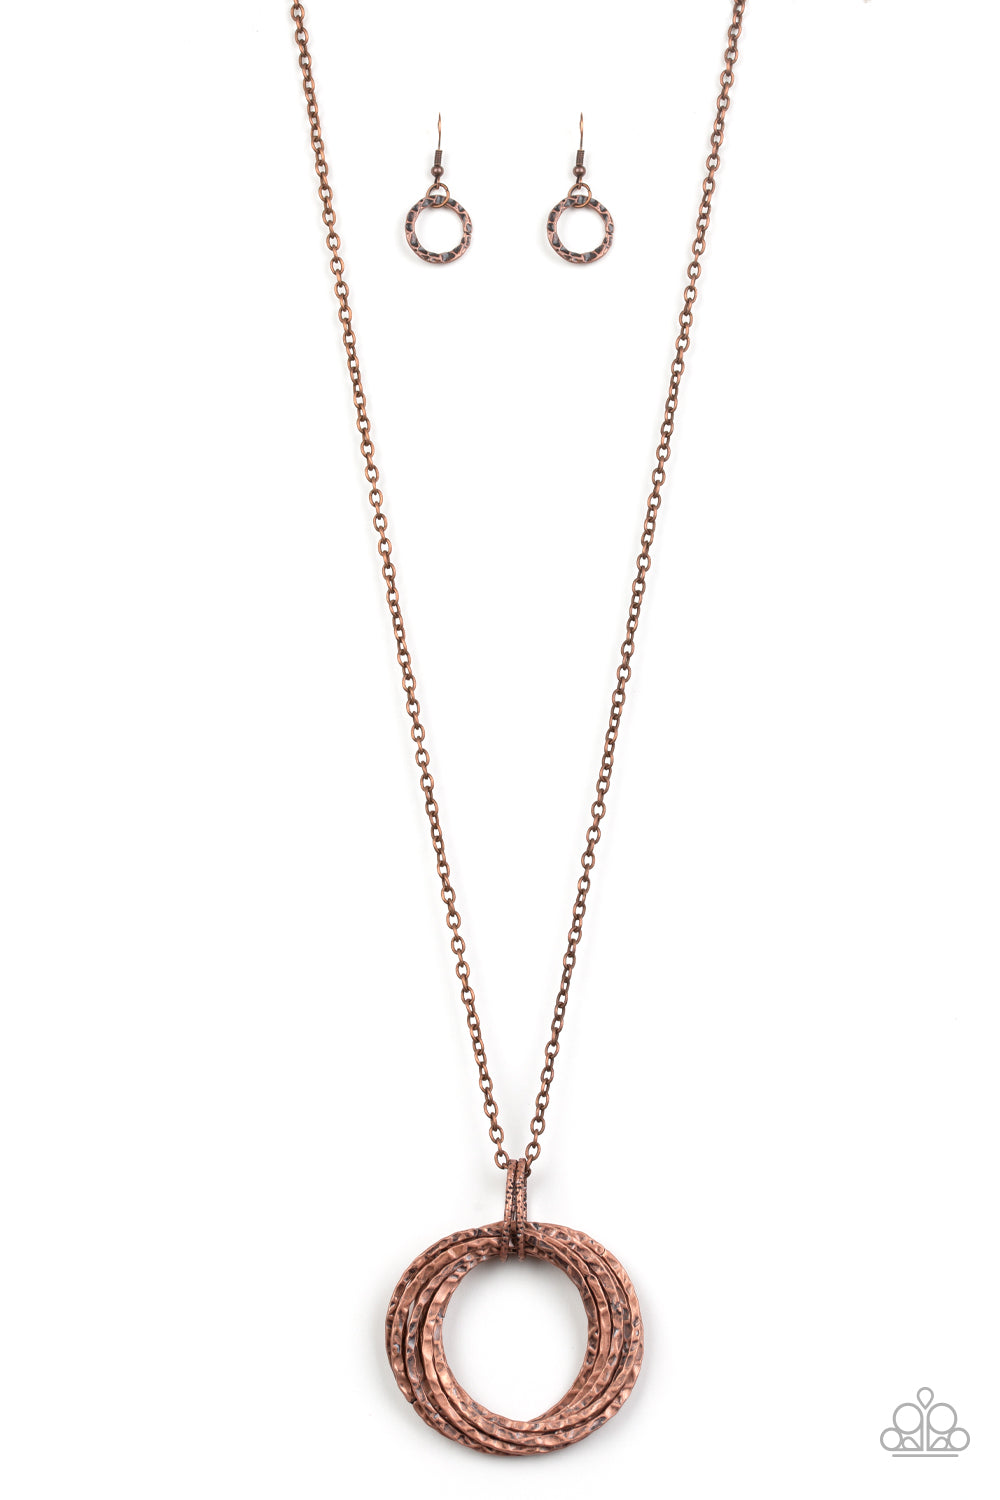 Paparazzi Accessories - Metal Marathon - Copper Necklace